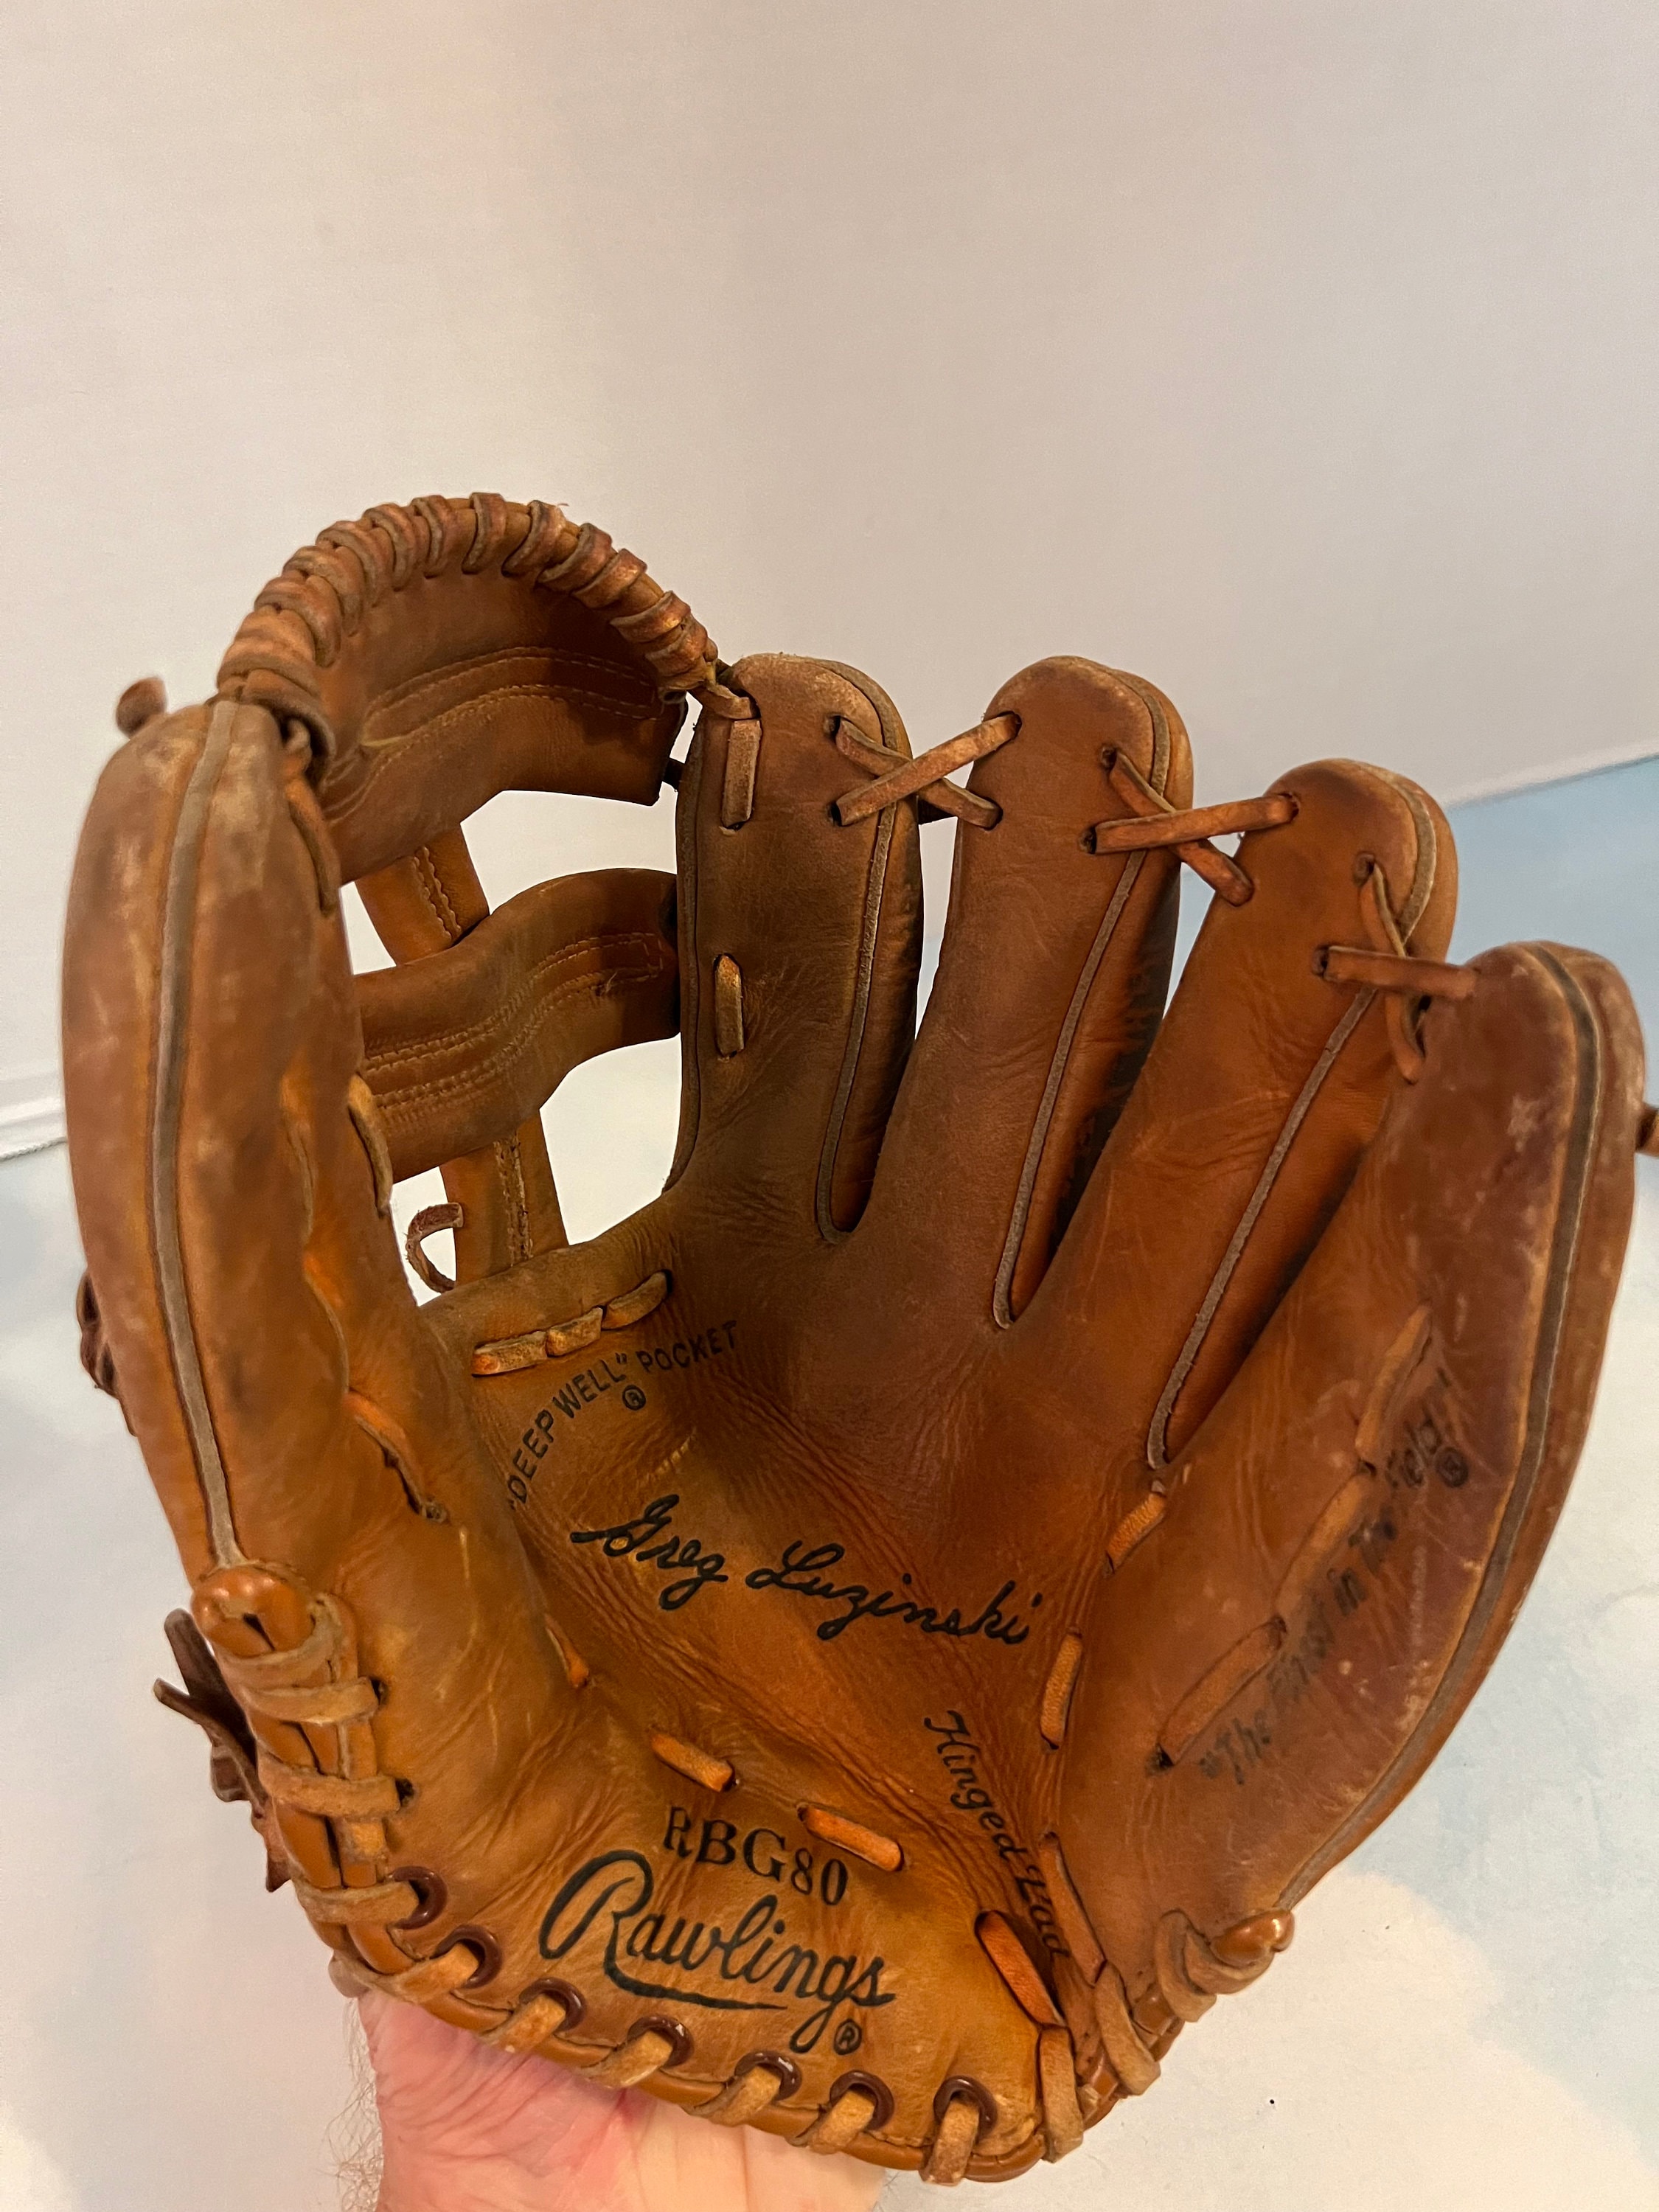 VTG Rawlings RBG80 Baseball Glove Greg Luzinski Right-hand 